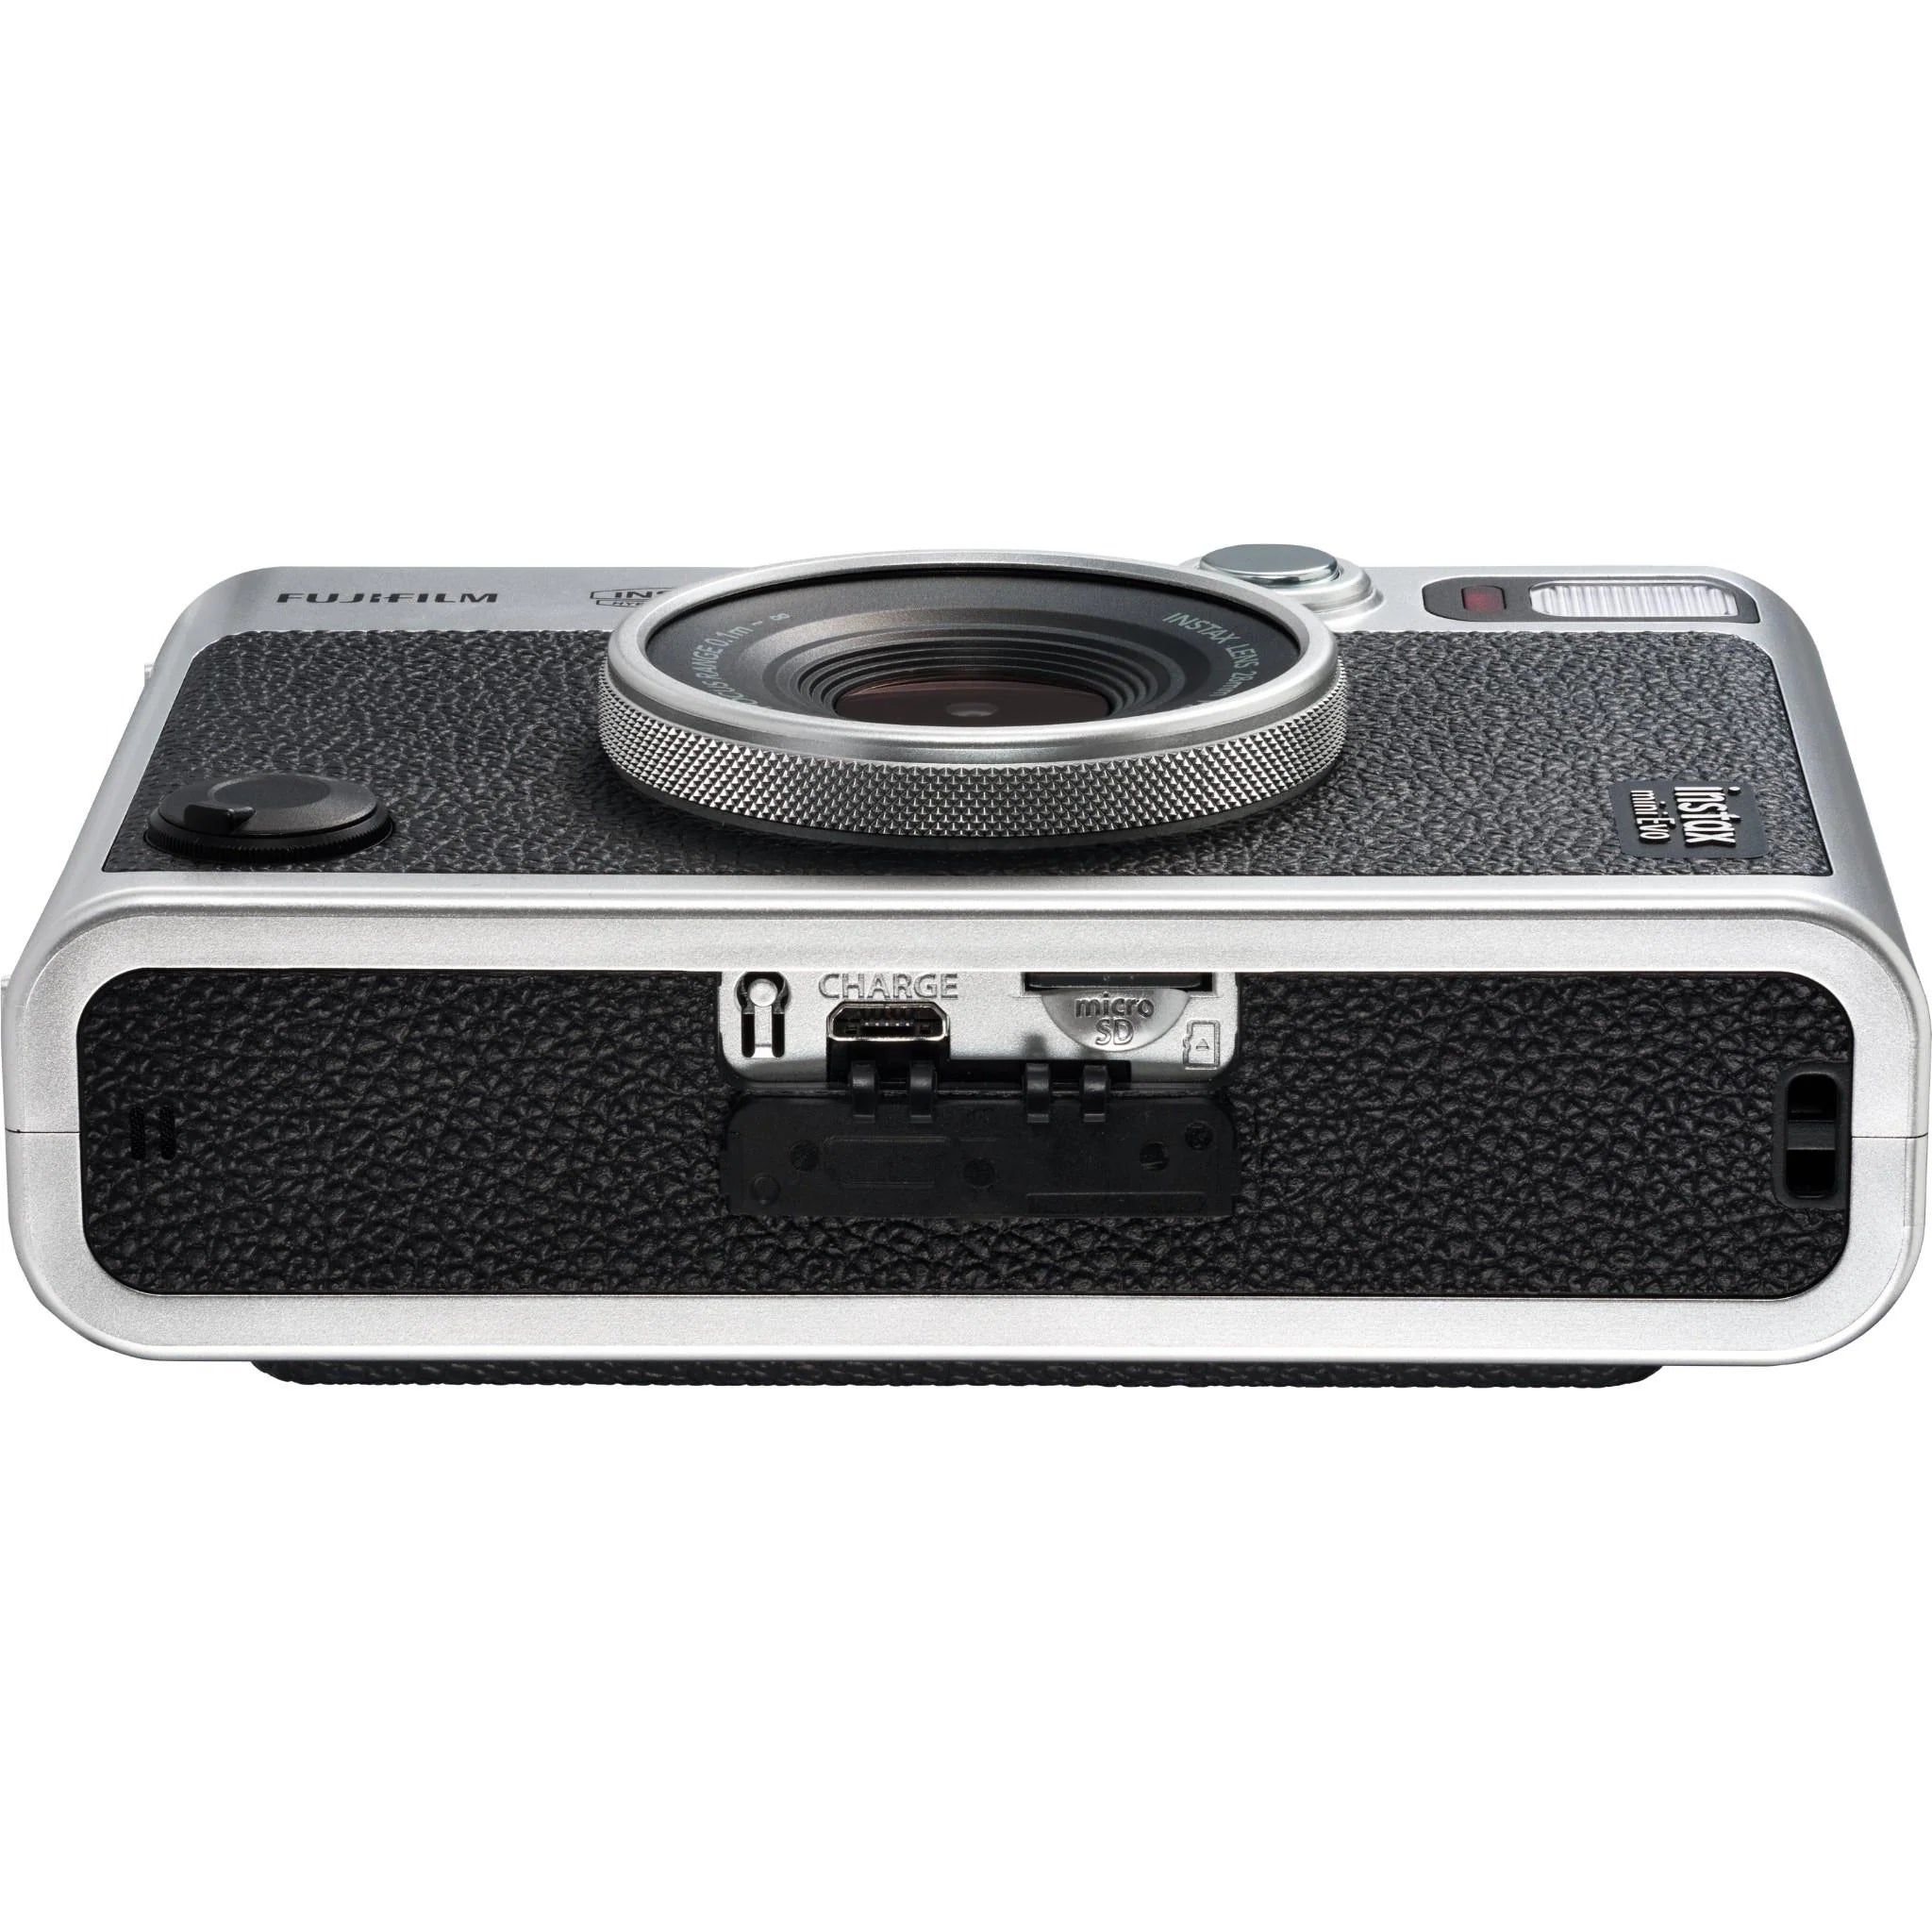 Instax Mini EVO Instant Camera (Black\Brown)